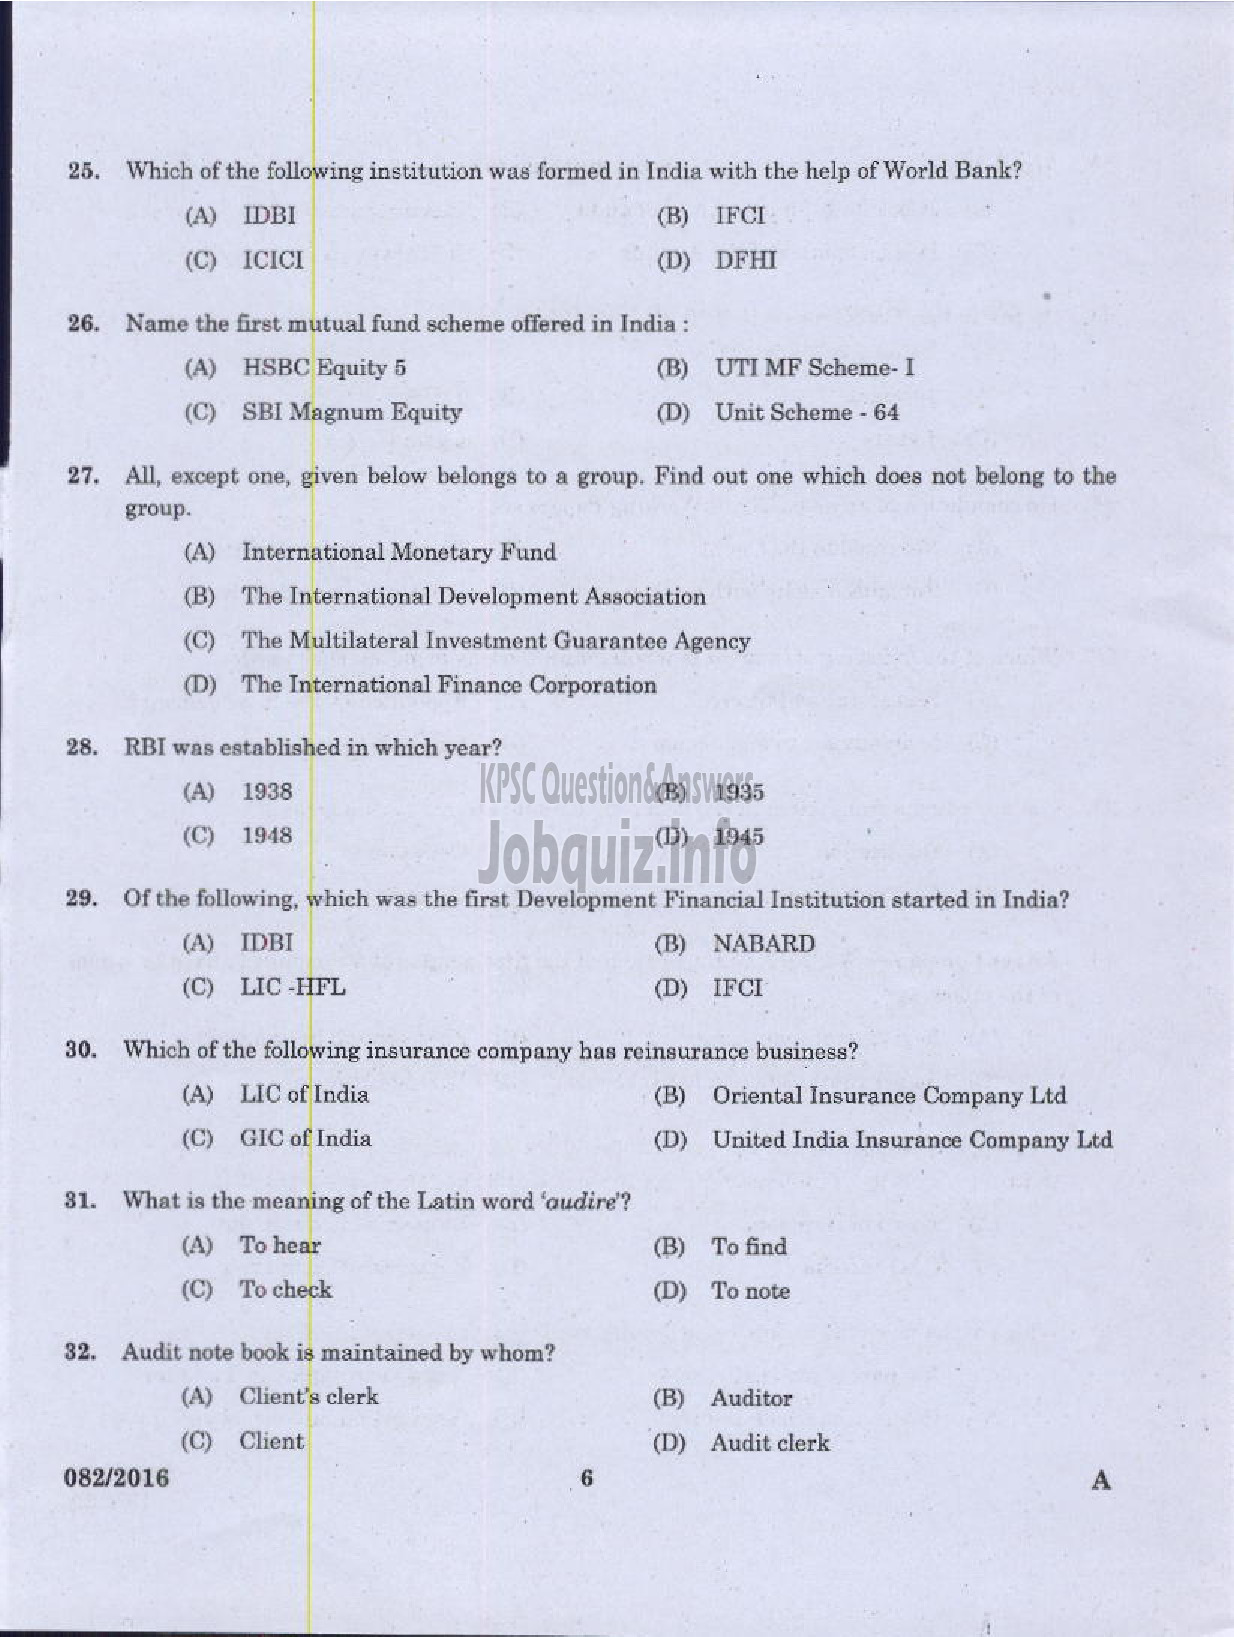 Kerala PSC Question Paper - ACCOUNTANT /JUNIOR ACCOUNTANT /ACCOUNTS ASSISTANT VARIOUS COMPANIES/CORPNS/BOARDS/SOCIETIES-4